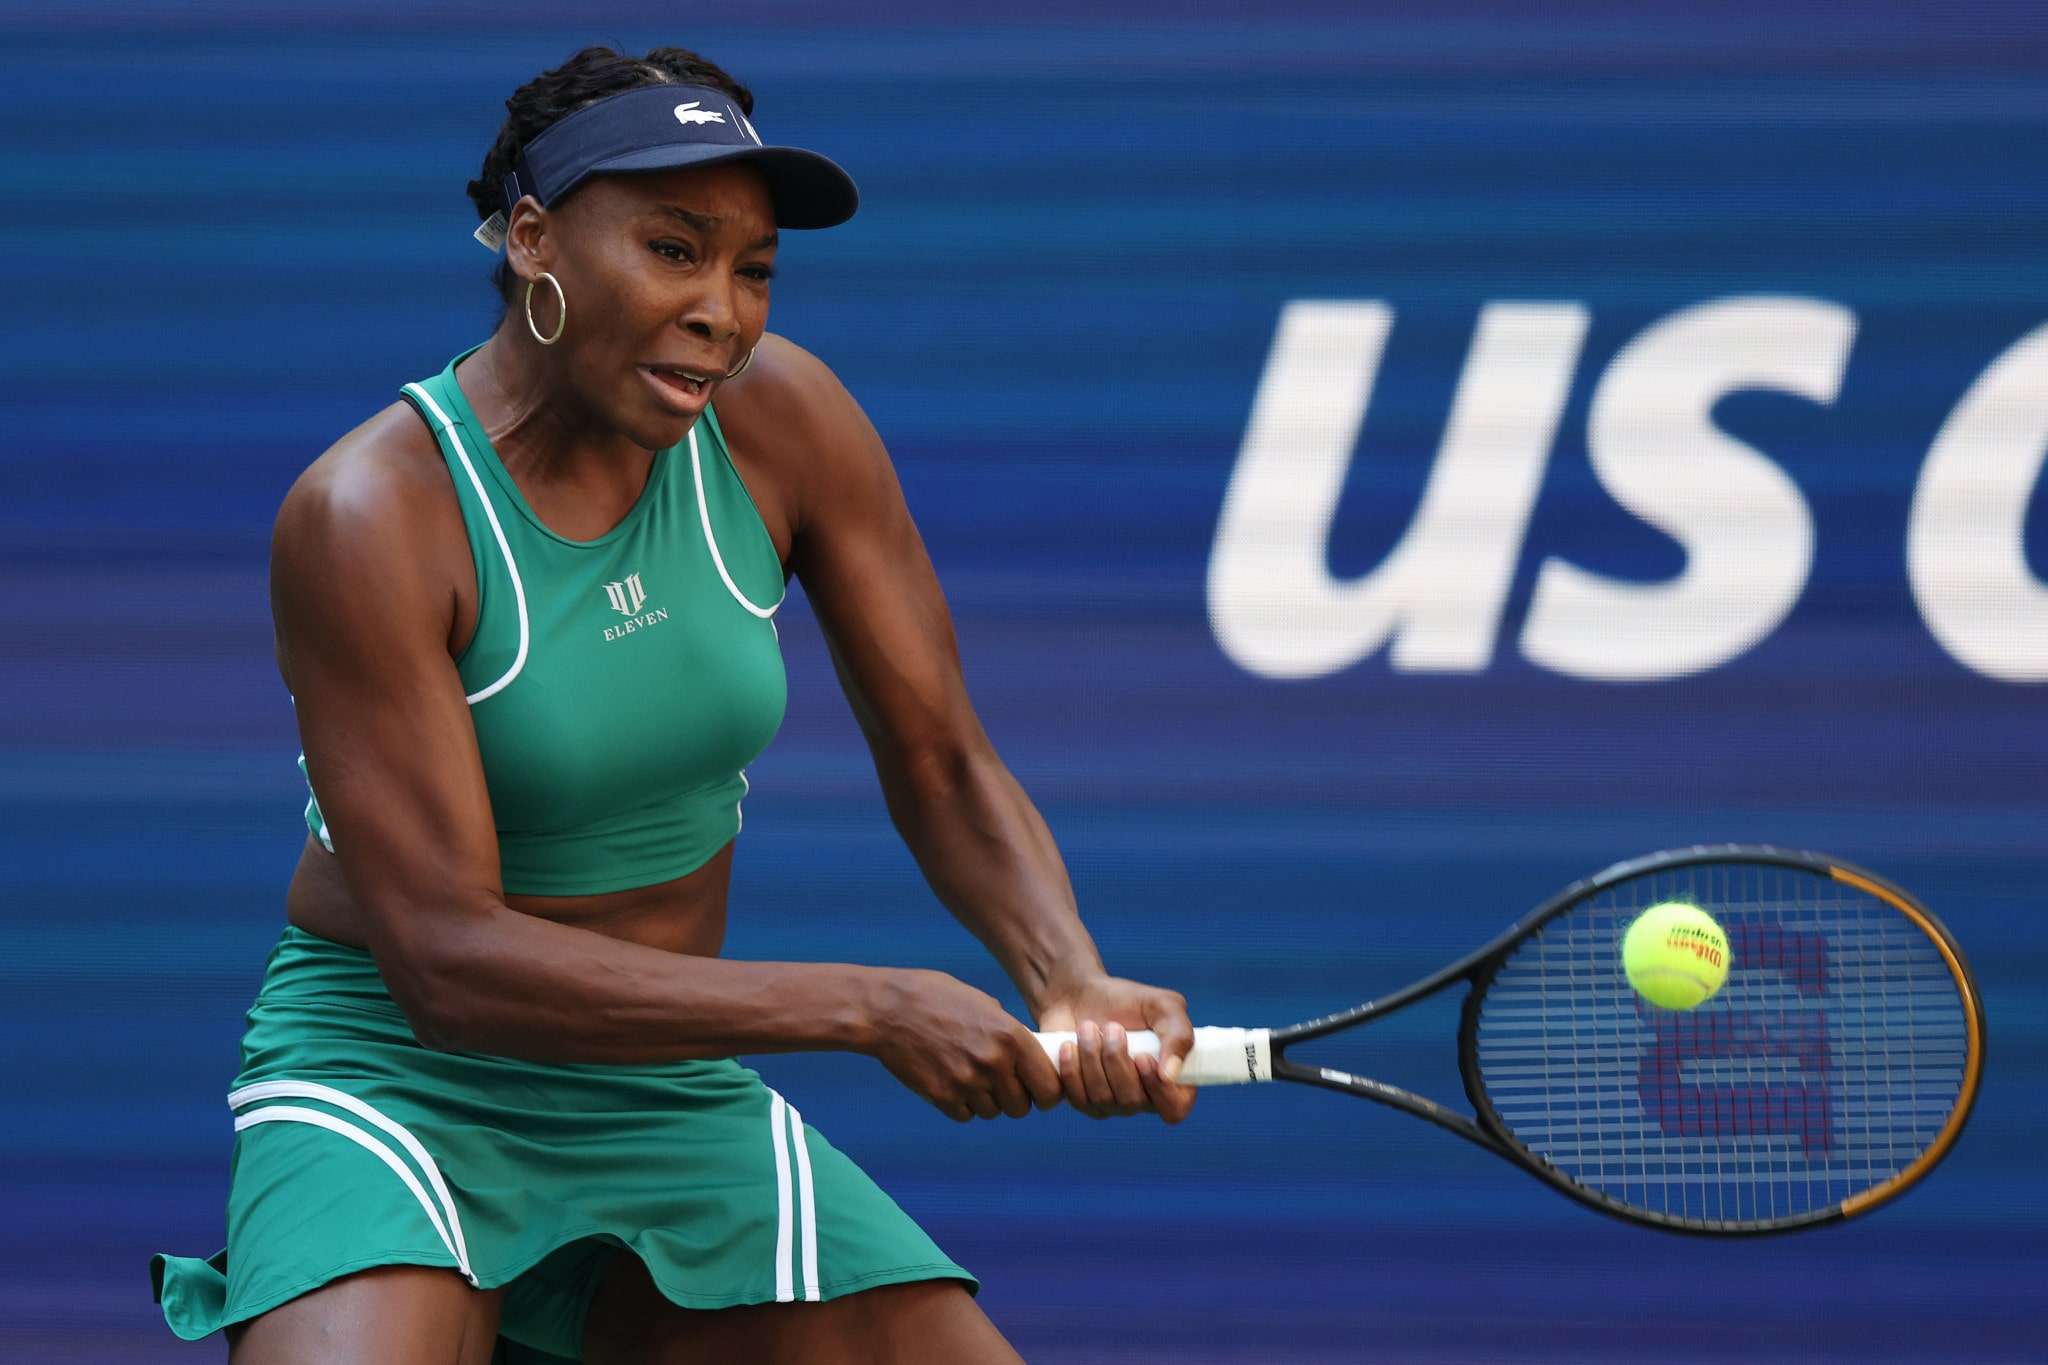 Venus Williams playing match